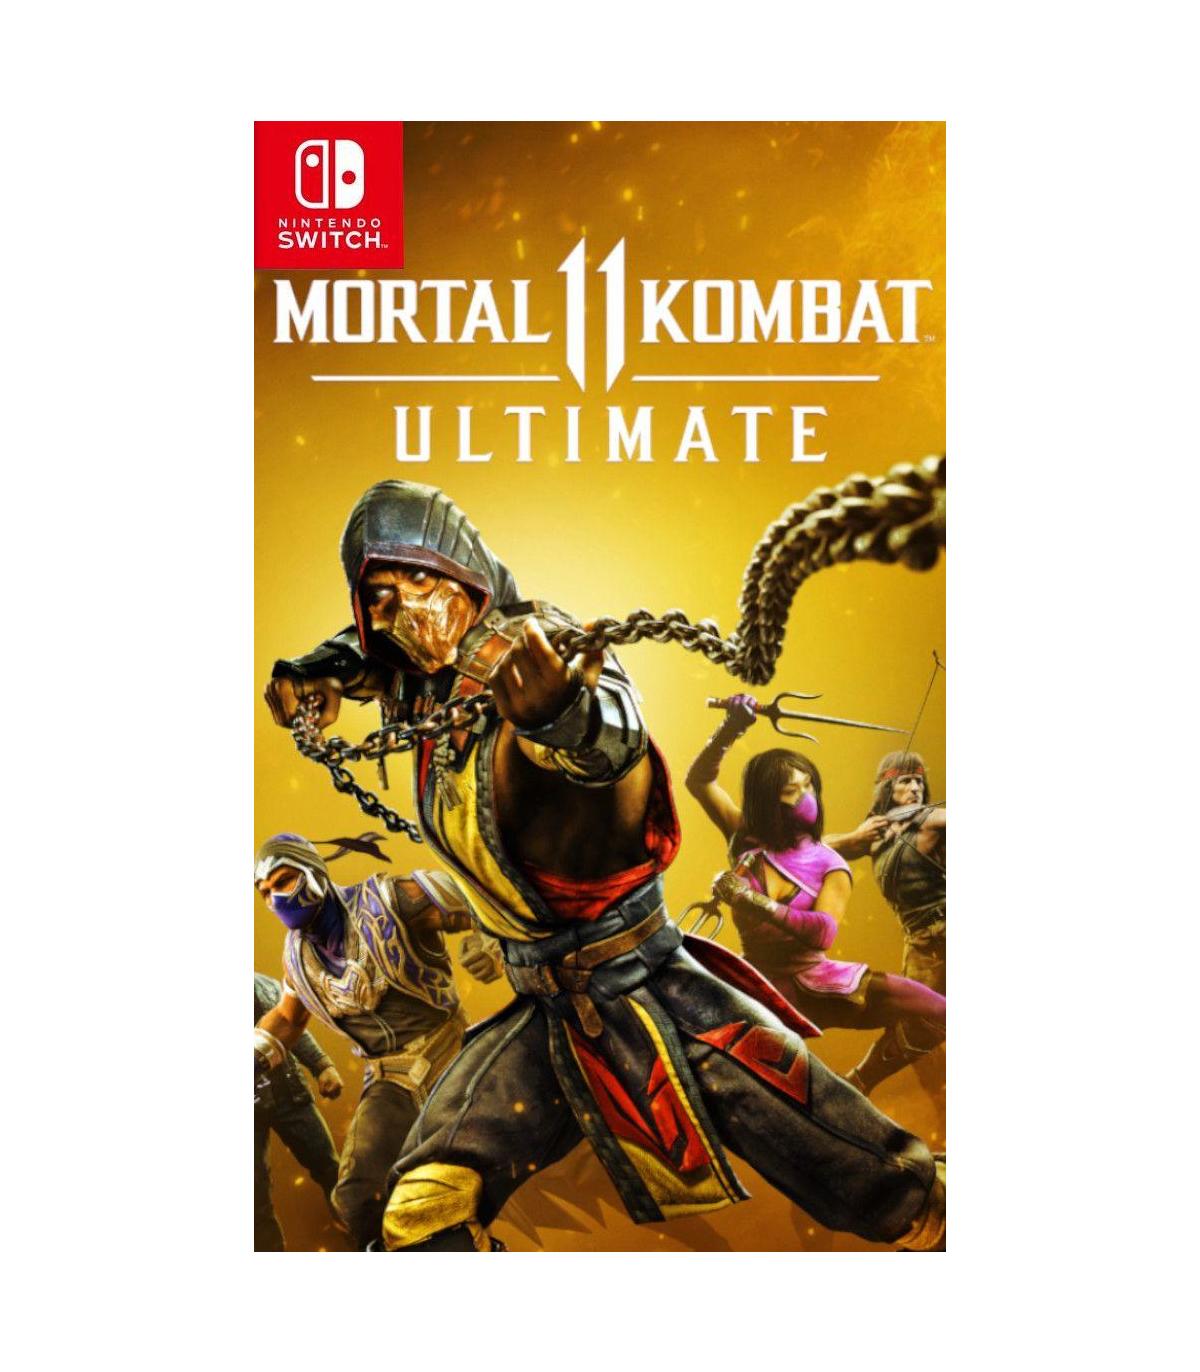 Мк 11 нинтендо. Мортал комбат 11 на Нинтендо свитч. Мортал комбат 11 ультимейт Нинтендо свитч. Mortal Kombat 11 Ultimate. Mk11 Ultimate Nintendo Switch.